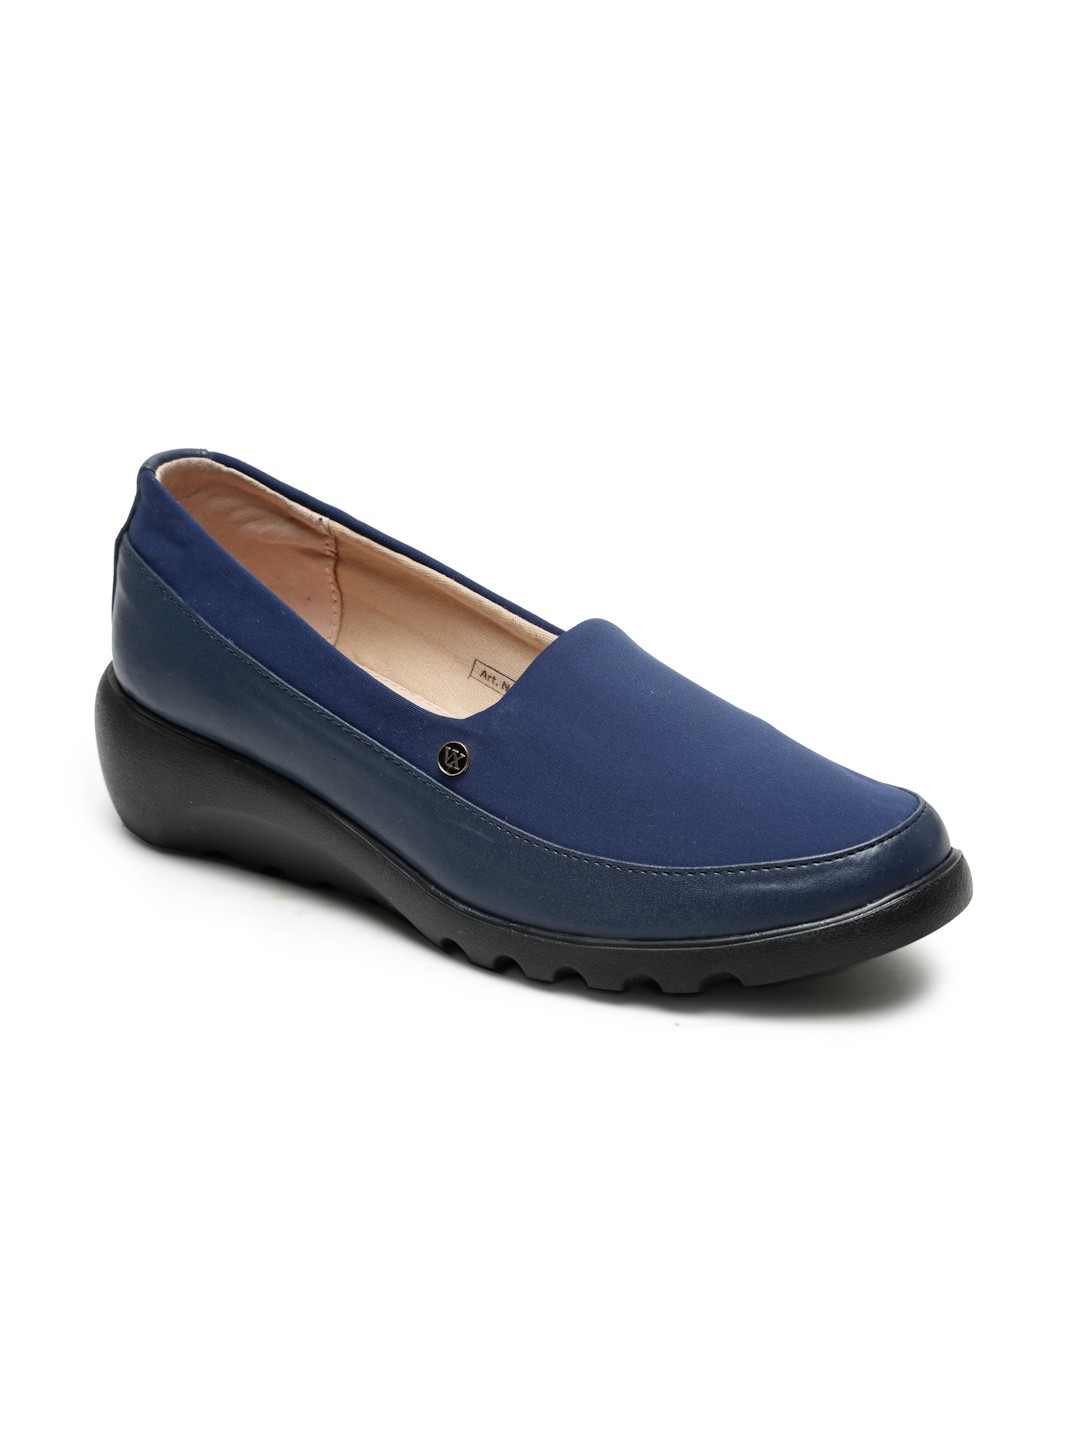 Buy Von Wellx Germany Comfort Women's Blue Casual Shoes Elsa Online in Kuwait City